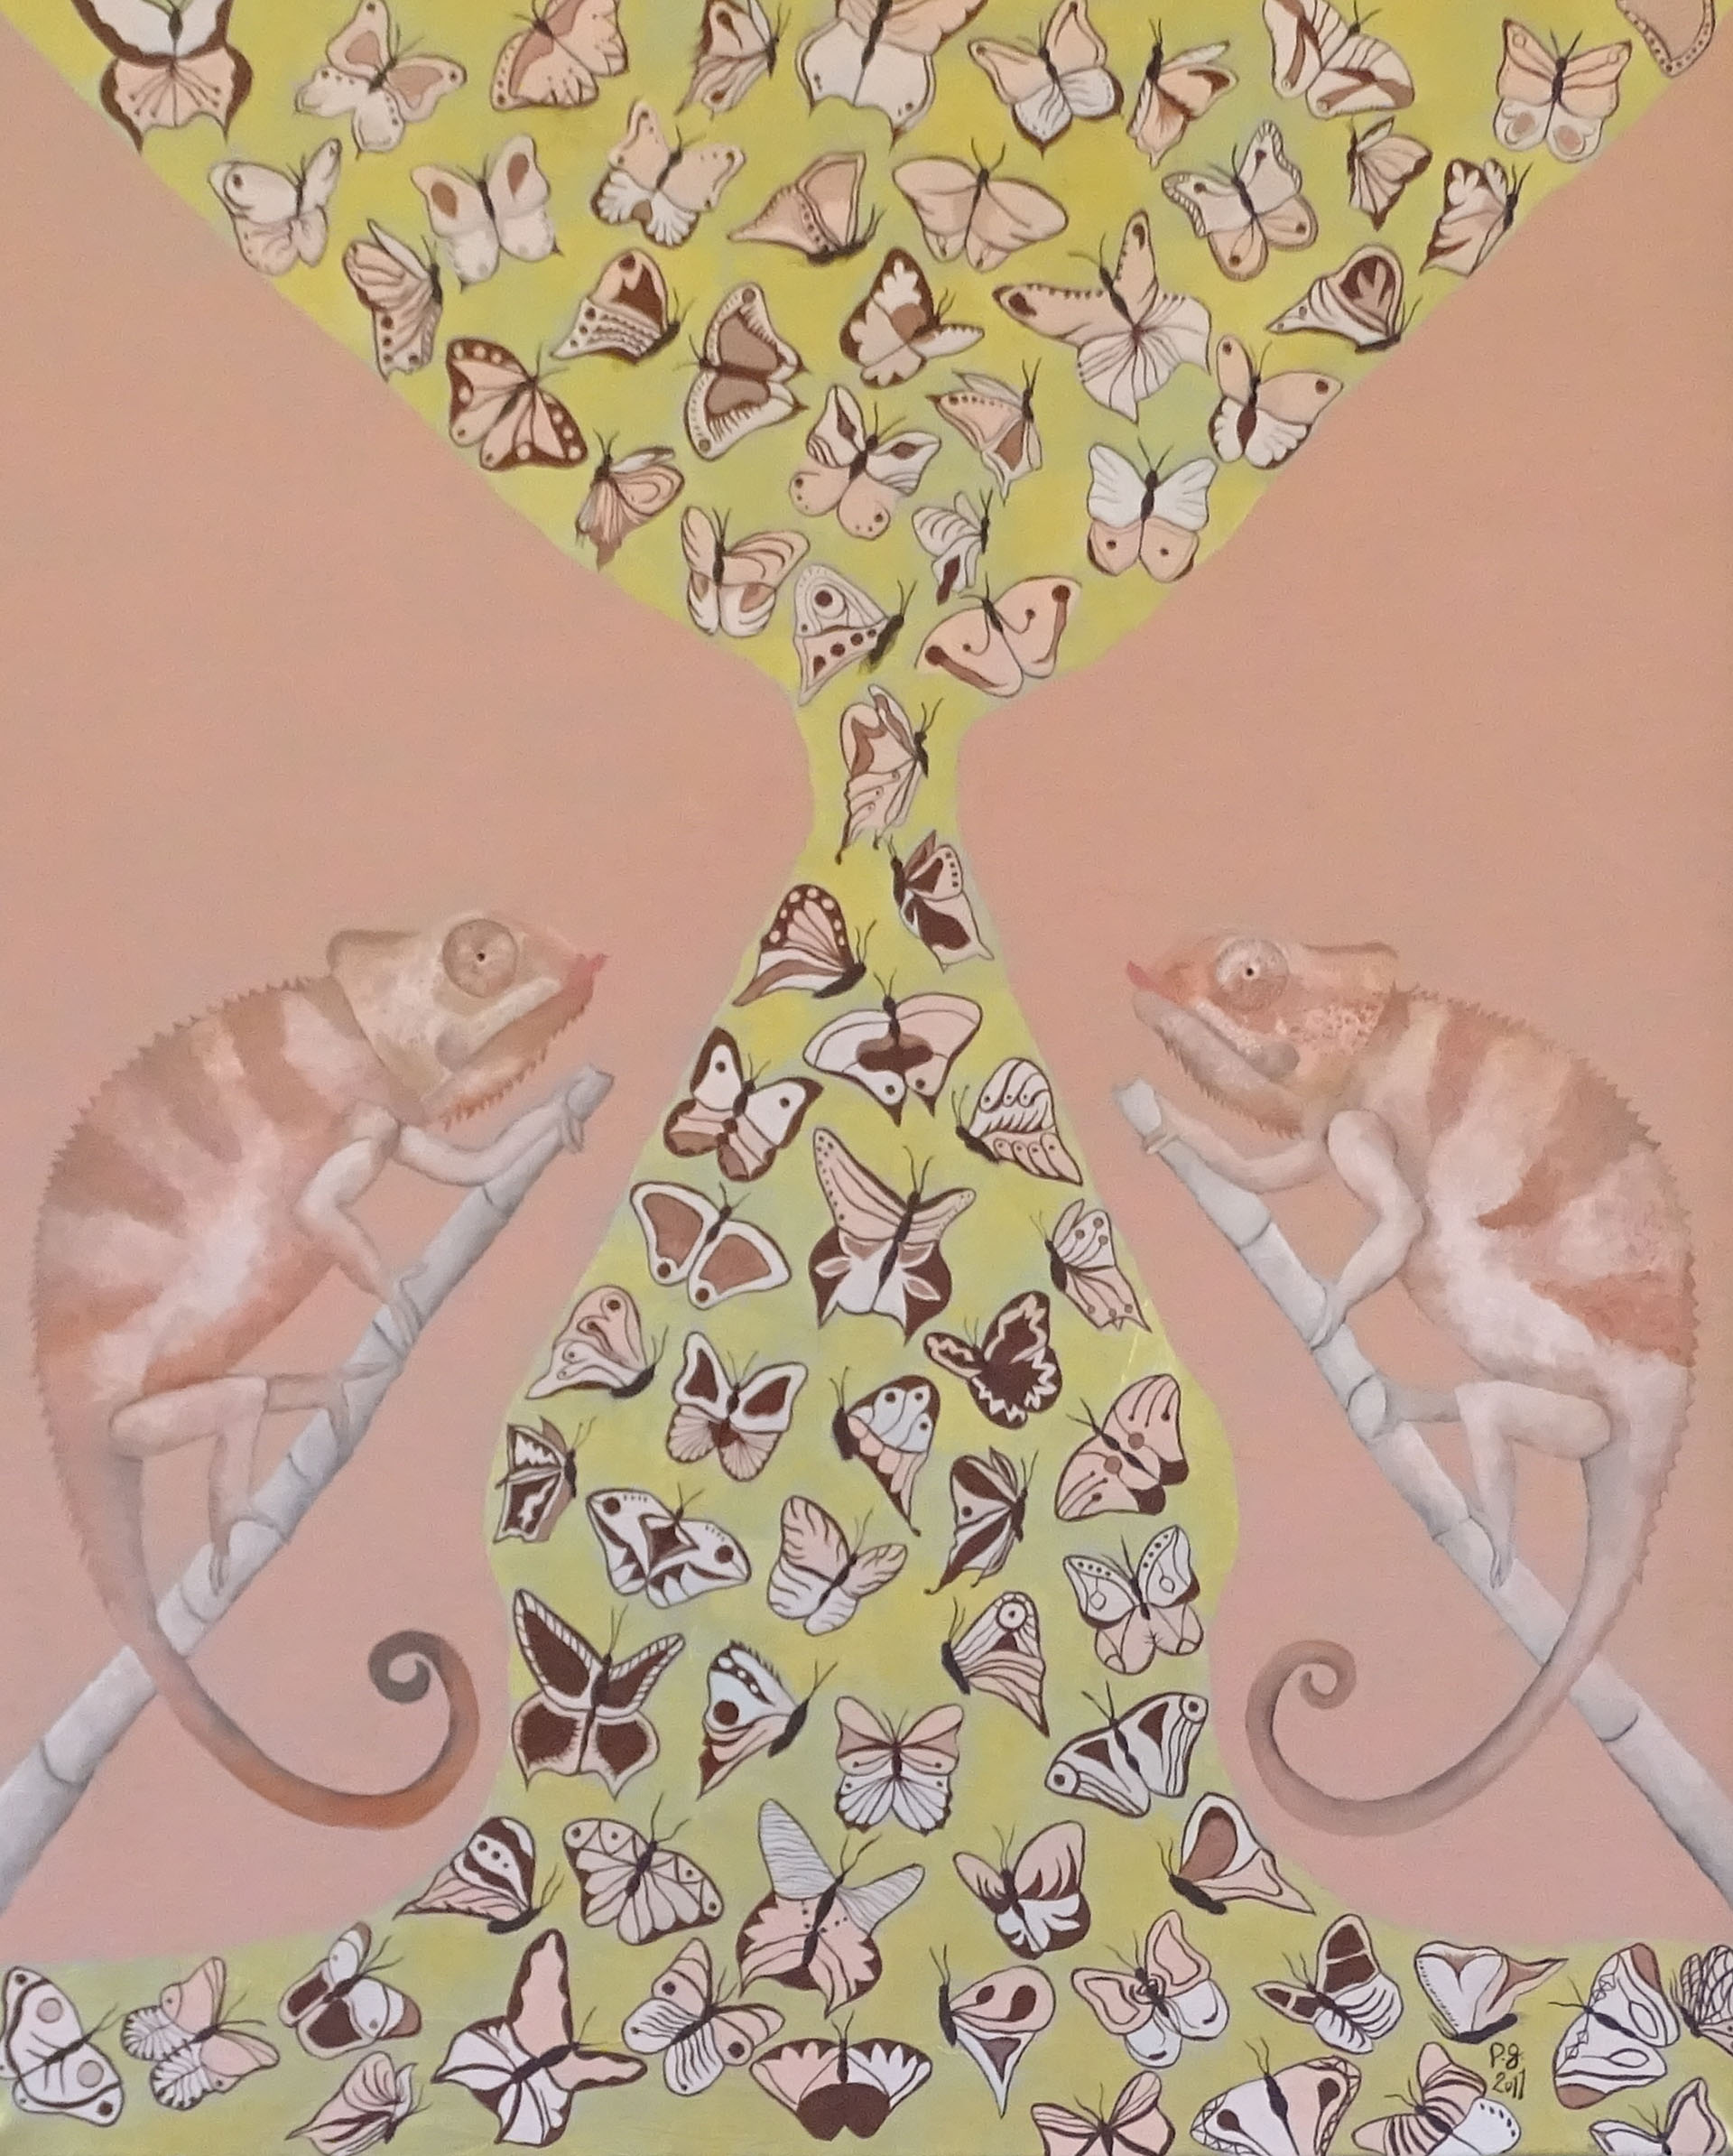 patrick gourgouillat - "Chameleon and Butterflies [Animals]" - 2011